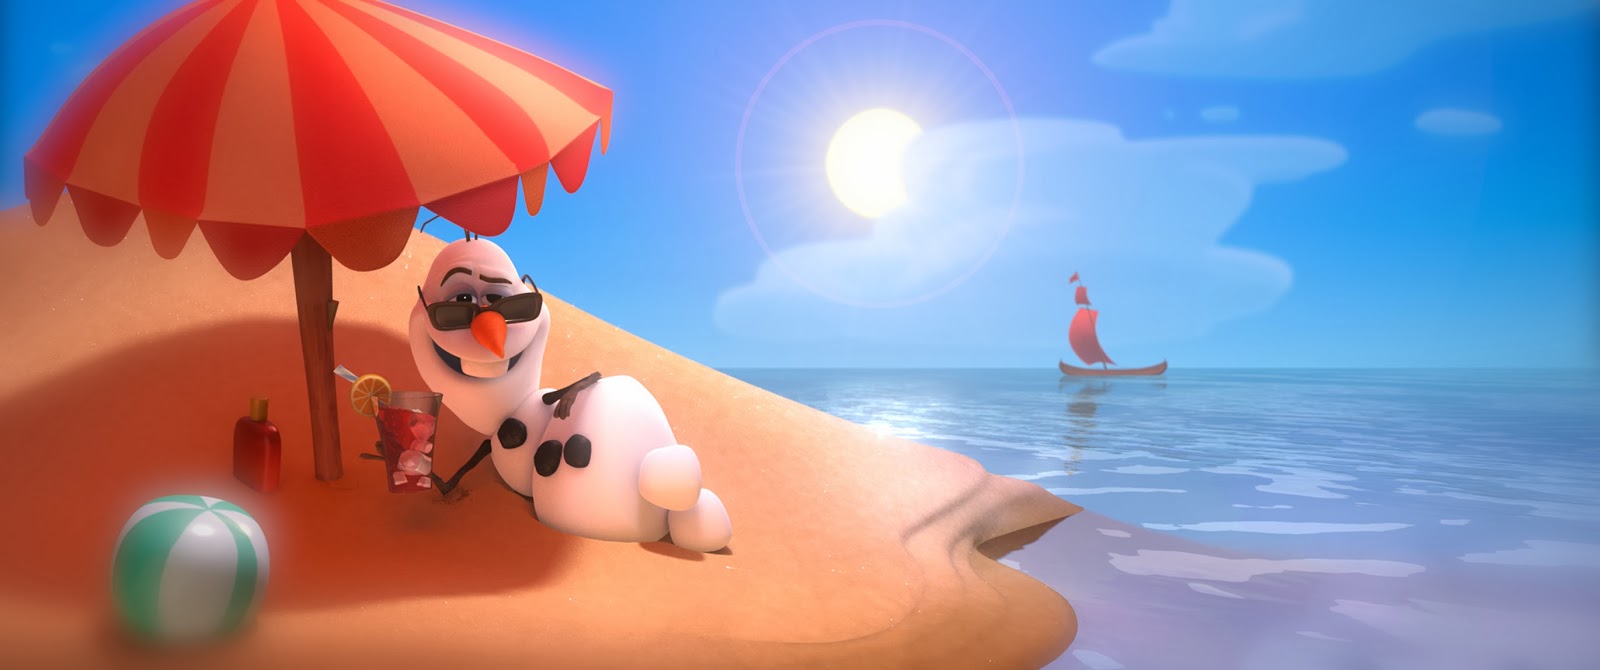 Olaf Frozen animatedfilmreviews.filminspector.com